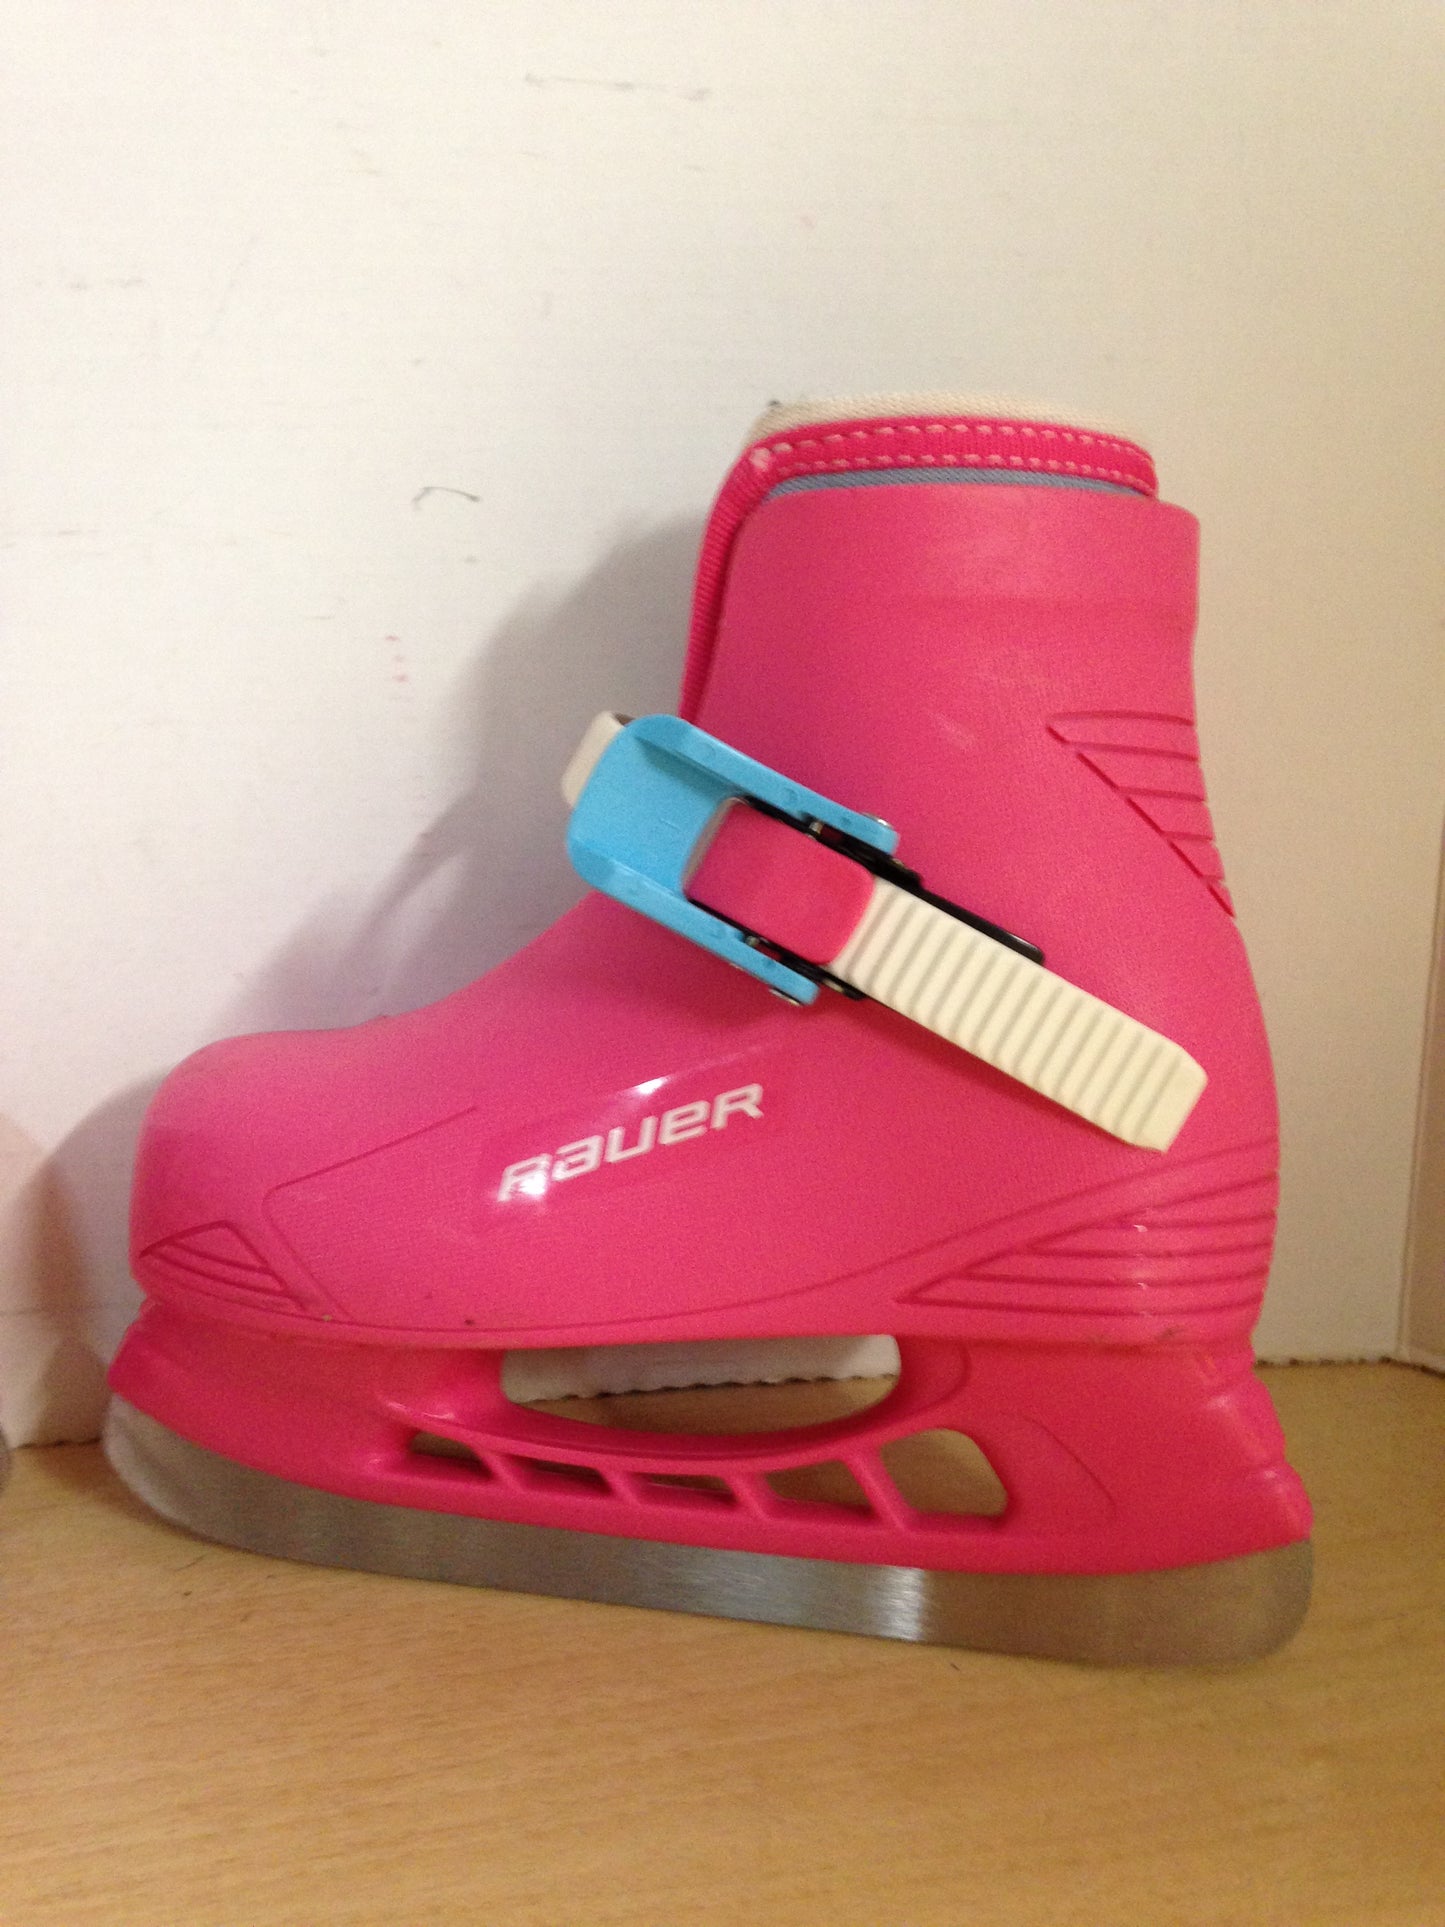 Ice Skate Child Size 8-9 Bauer Toddler Adjustable Pink White Molded Plastic Excellent